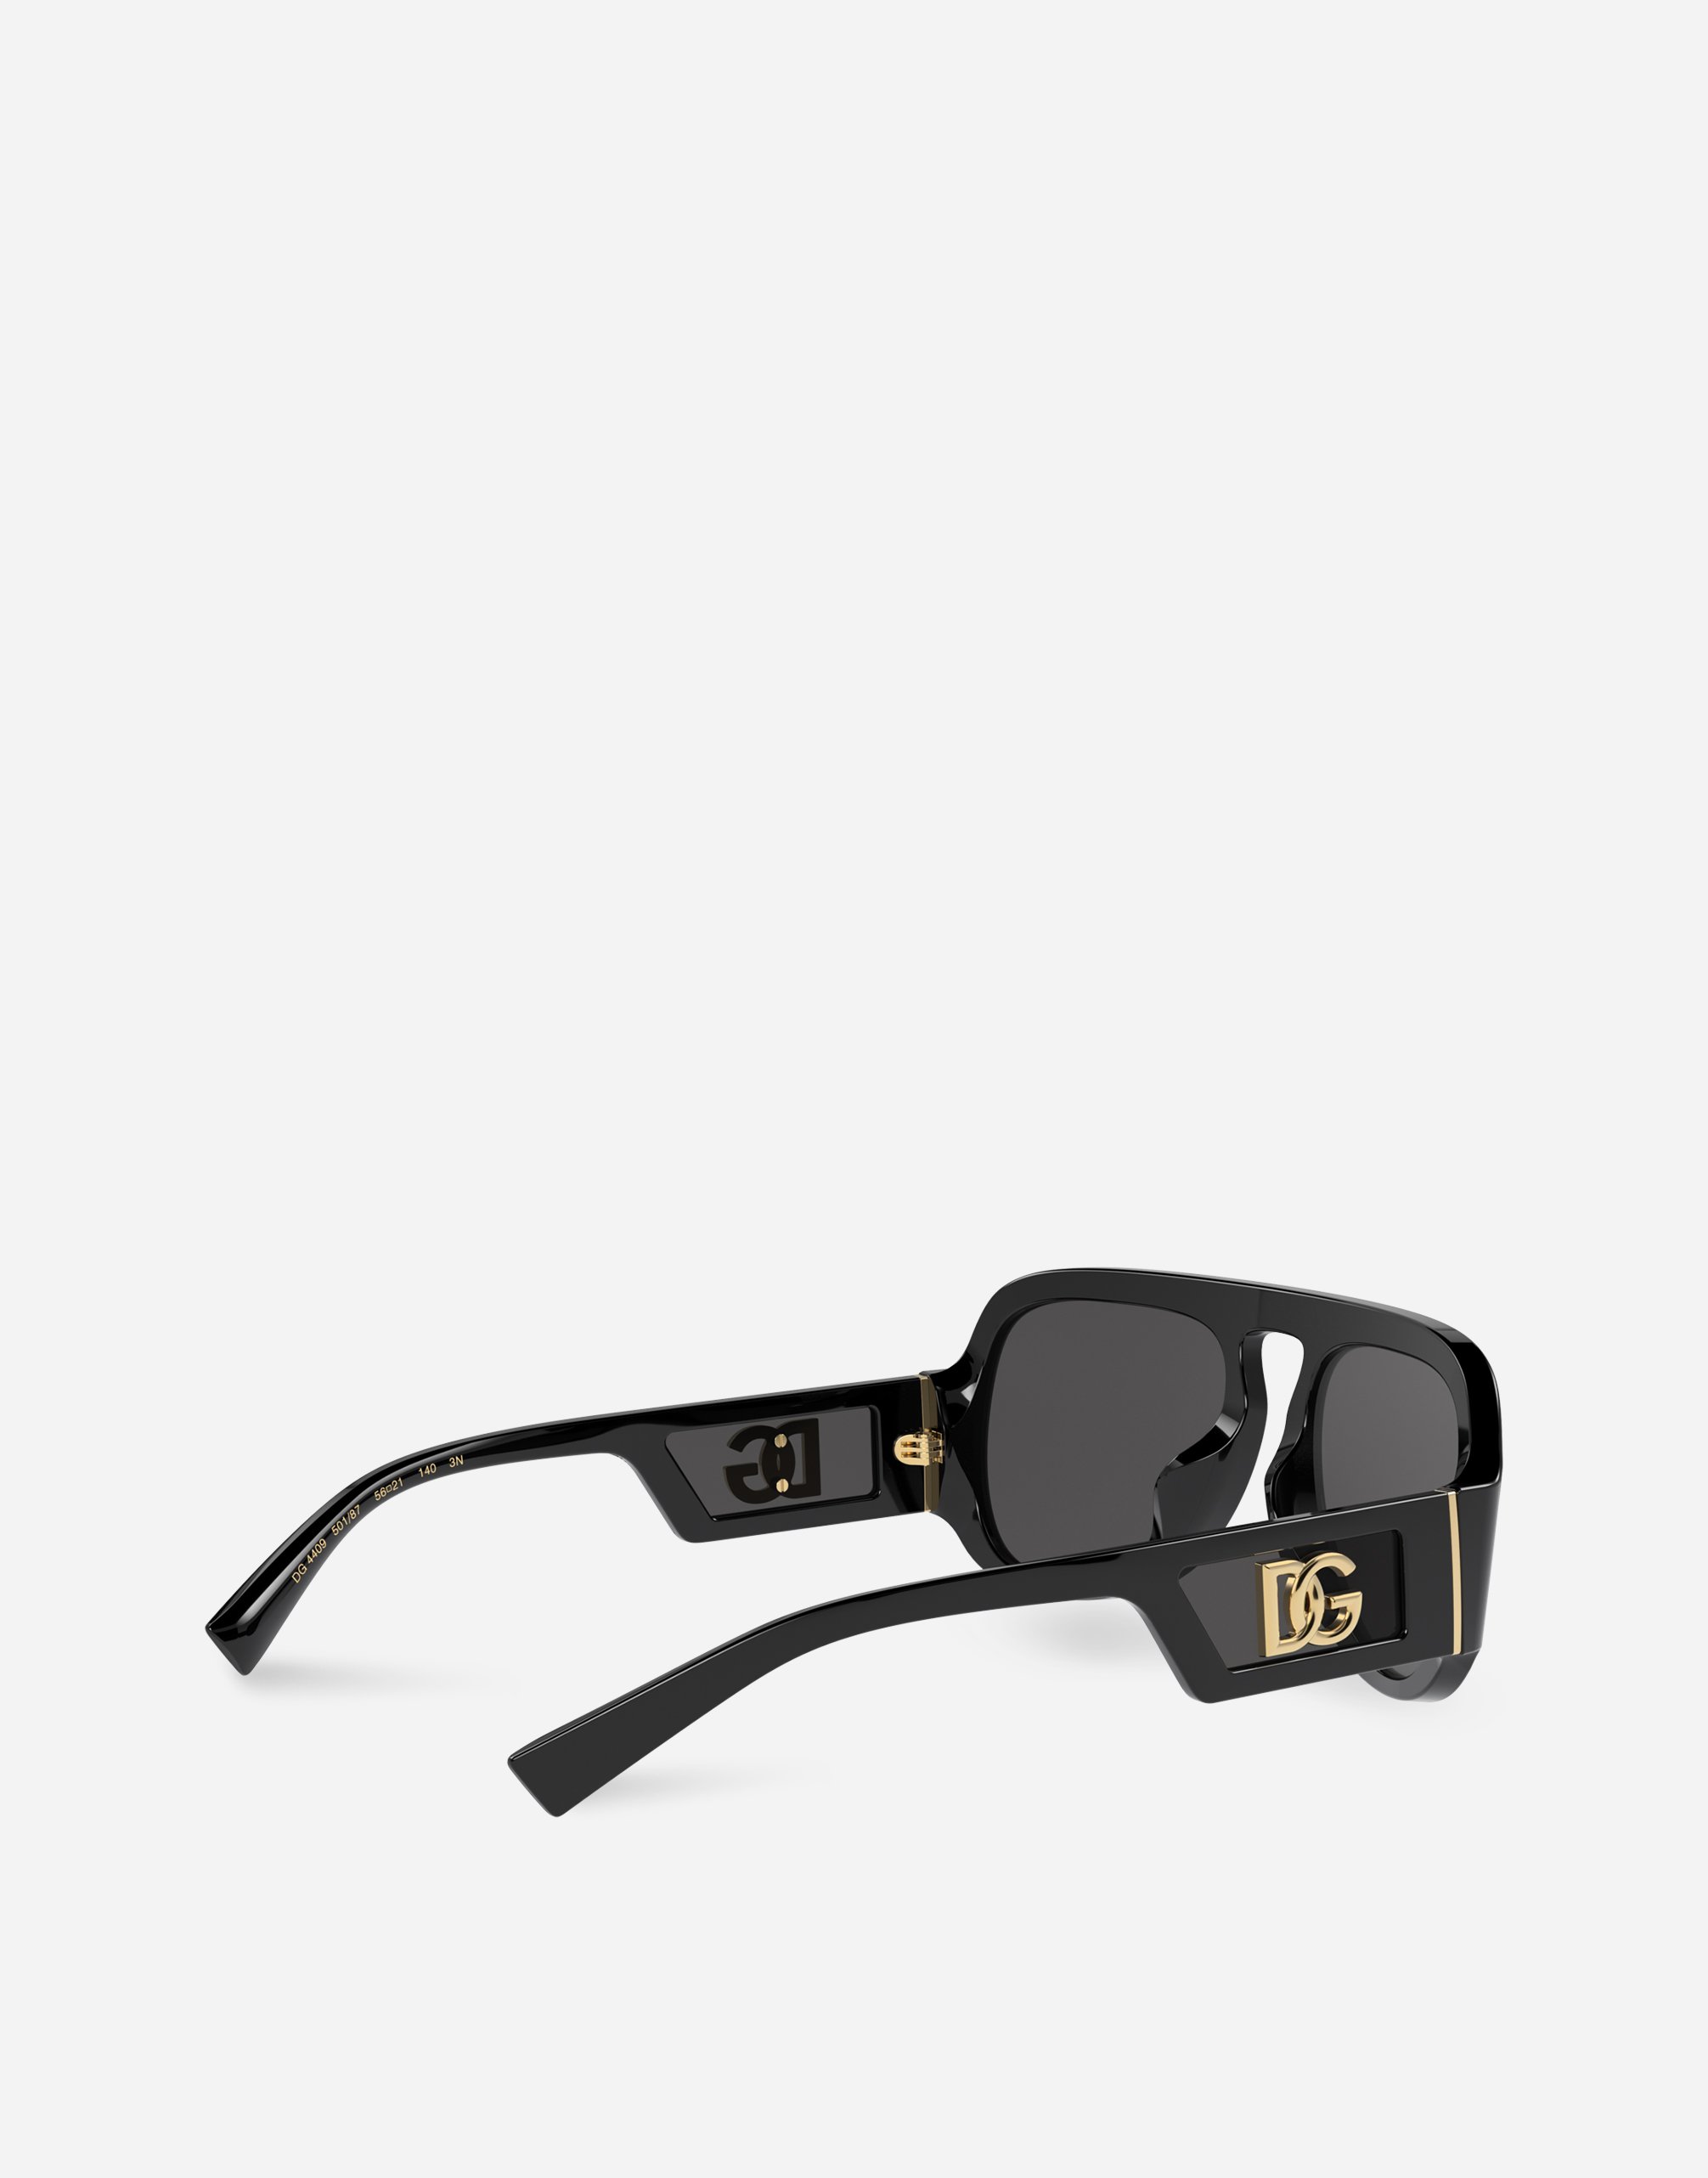 DG Crossed sunglasses in Black for Men | Dolce&Gabbana®